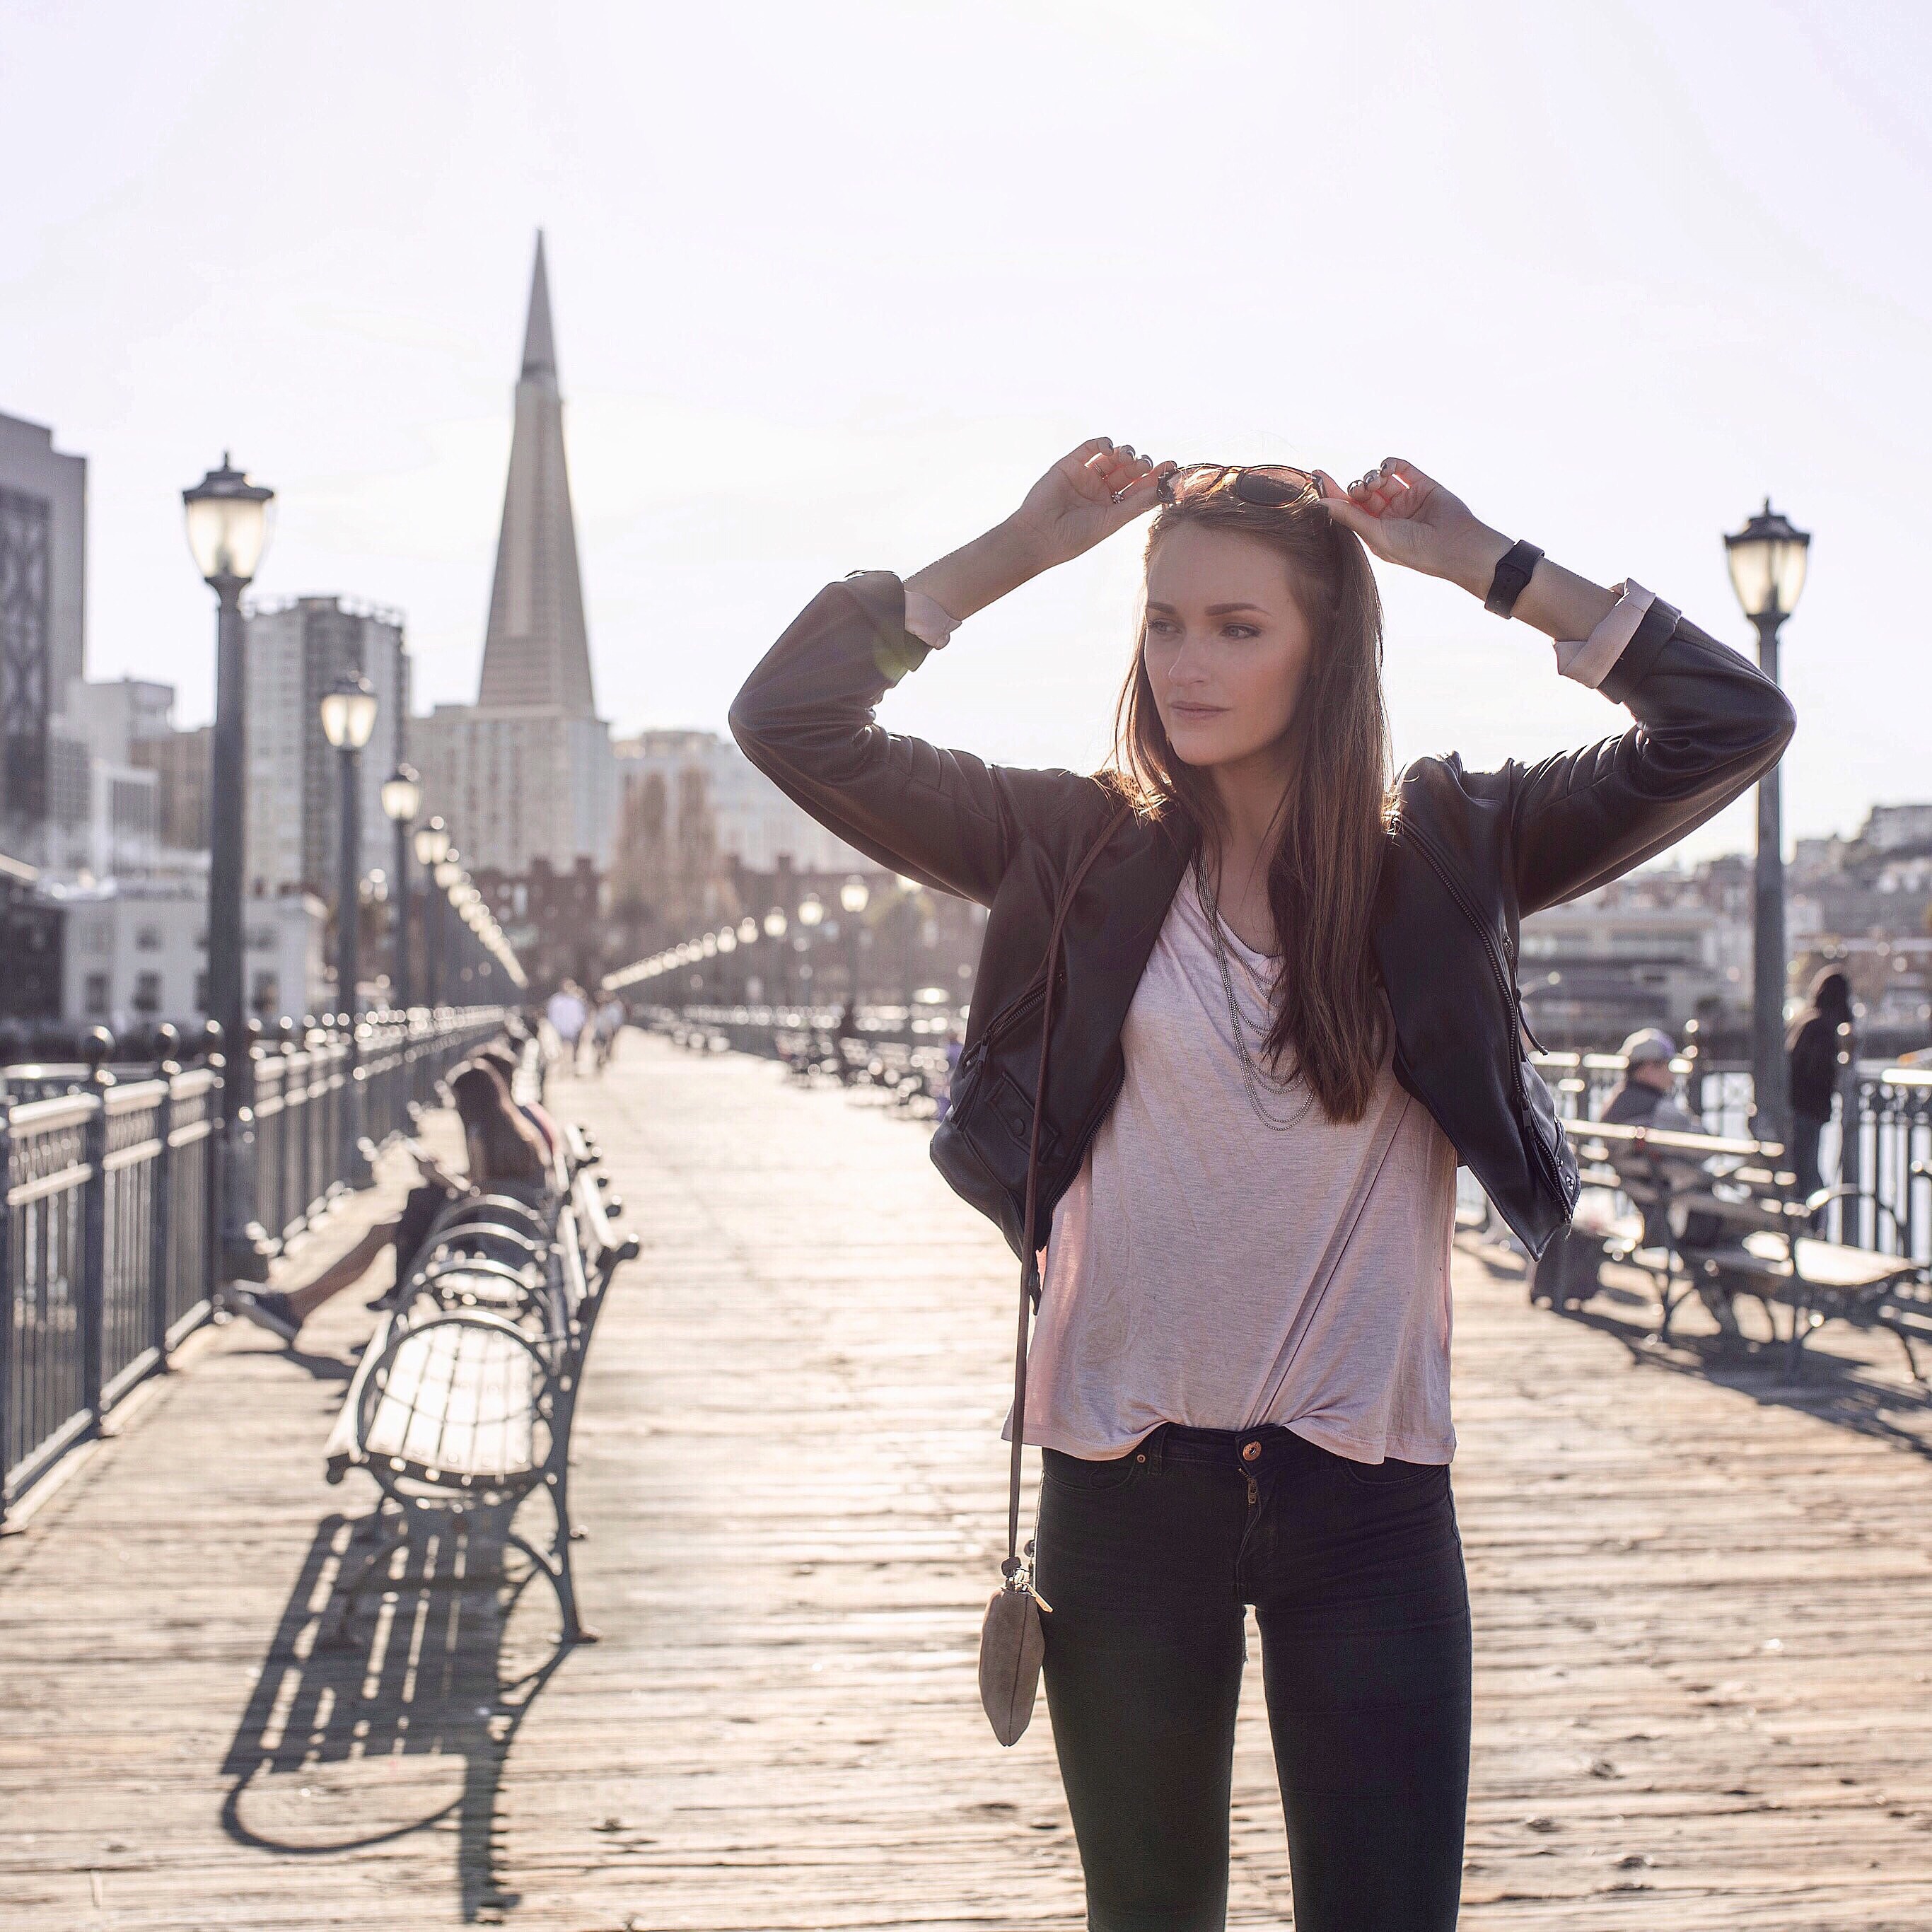 Alexandra Andersson ståendes på en bro med stad i bakgrunden